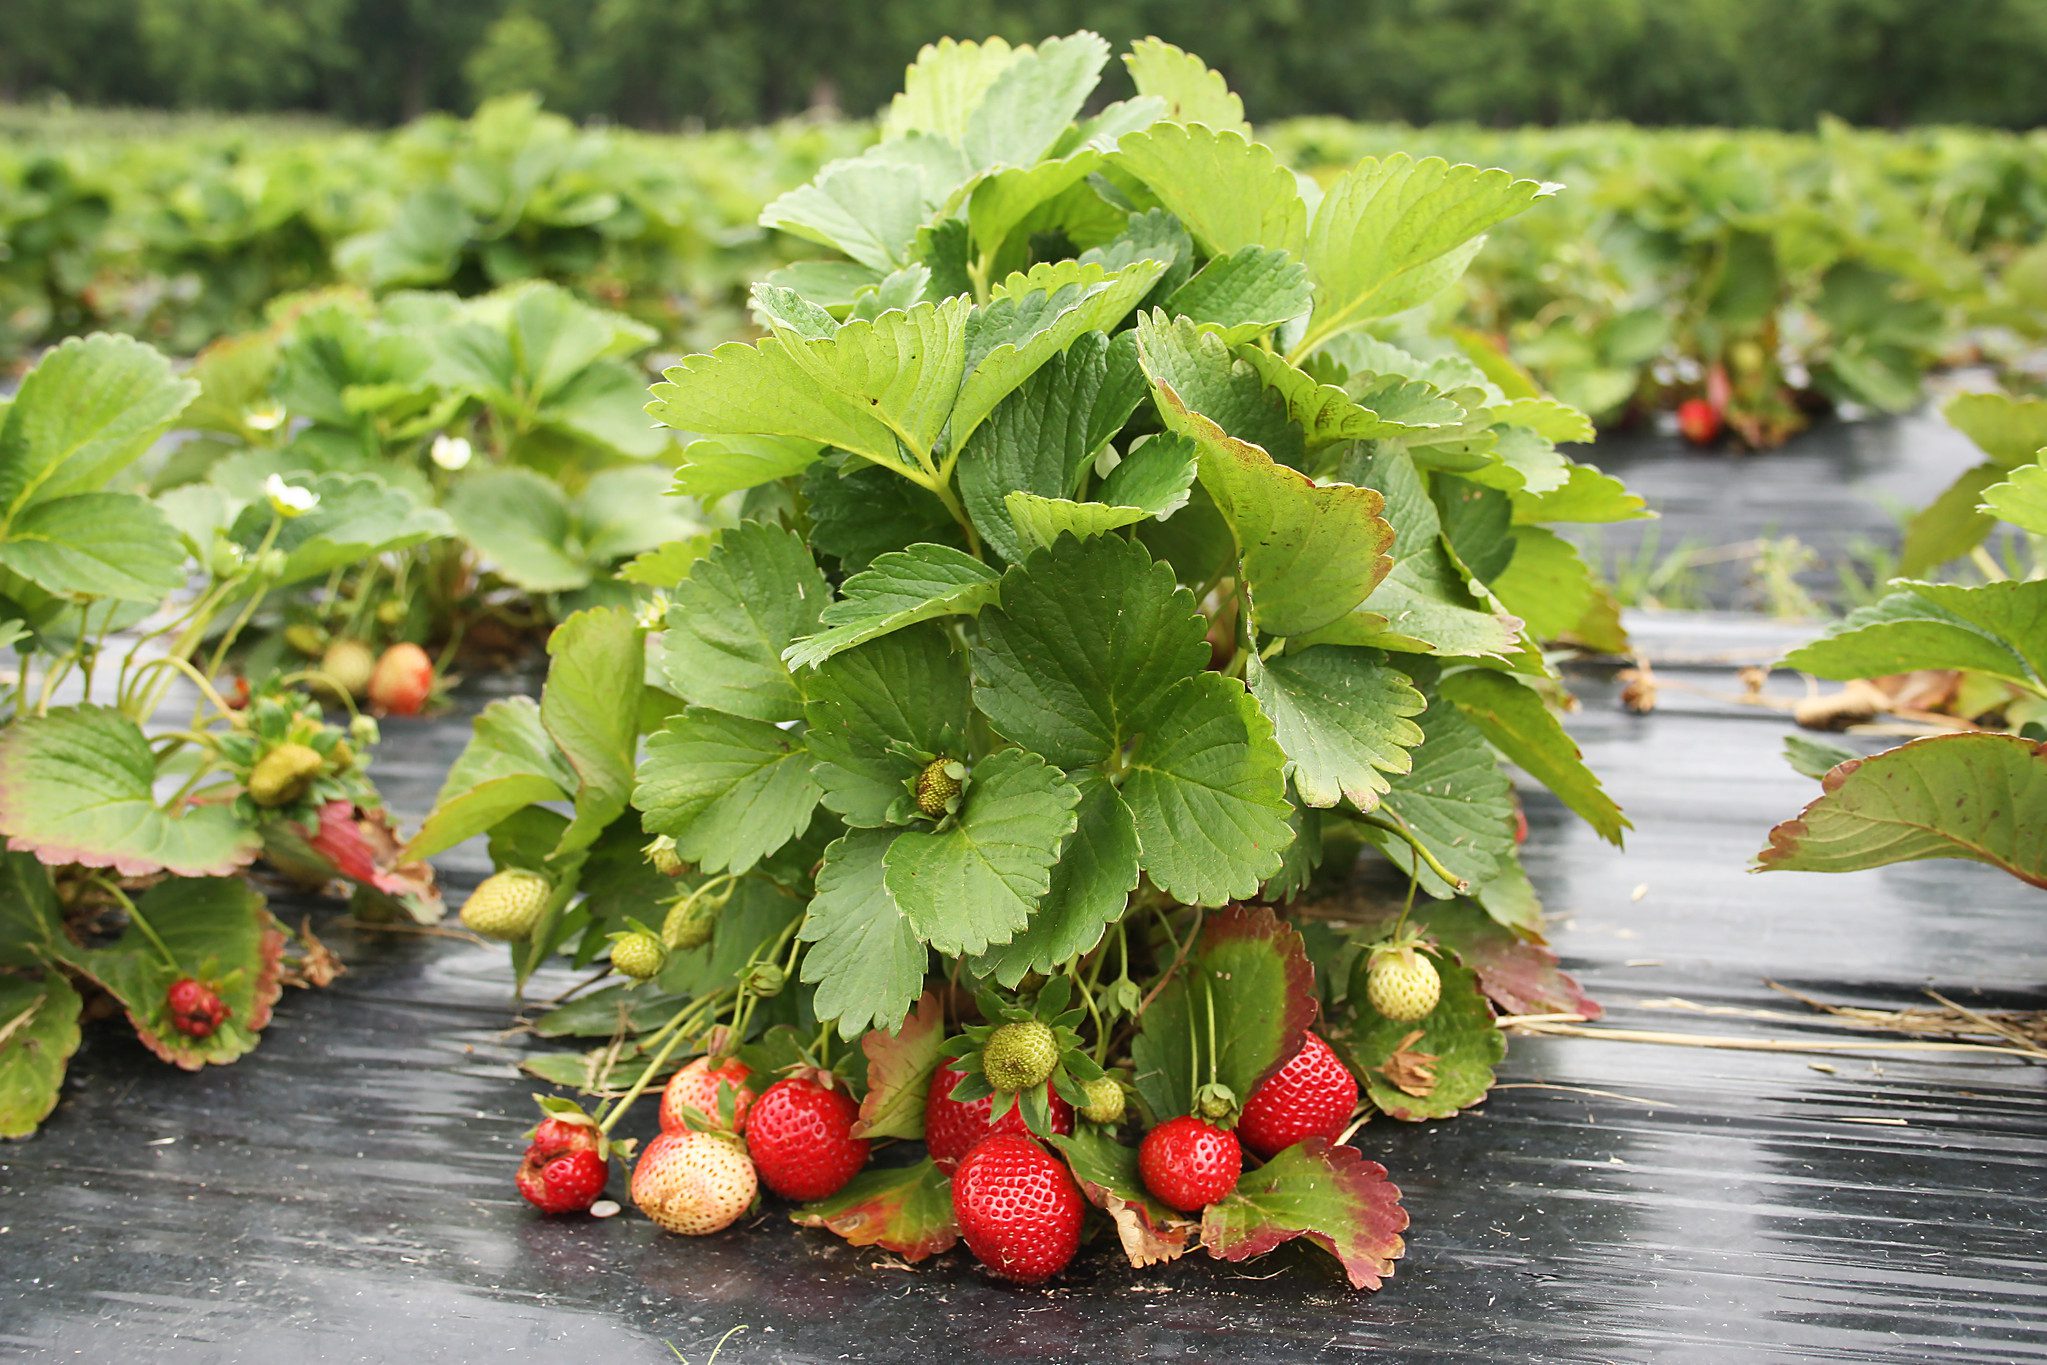 Strawberries growing in a field.